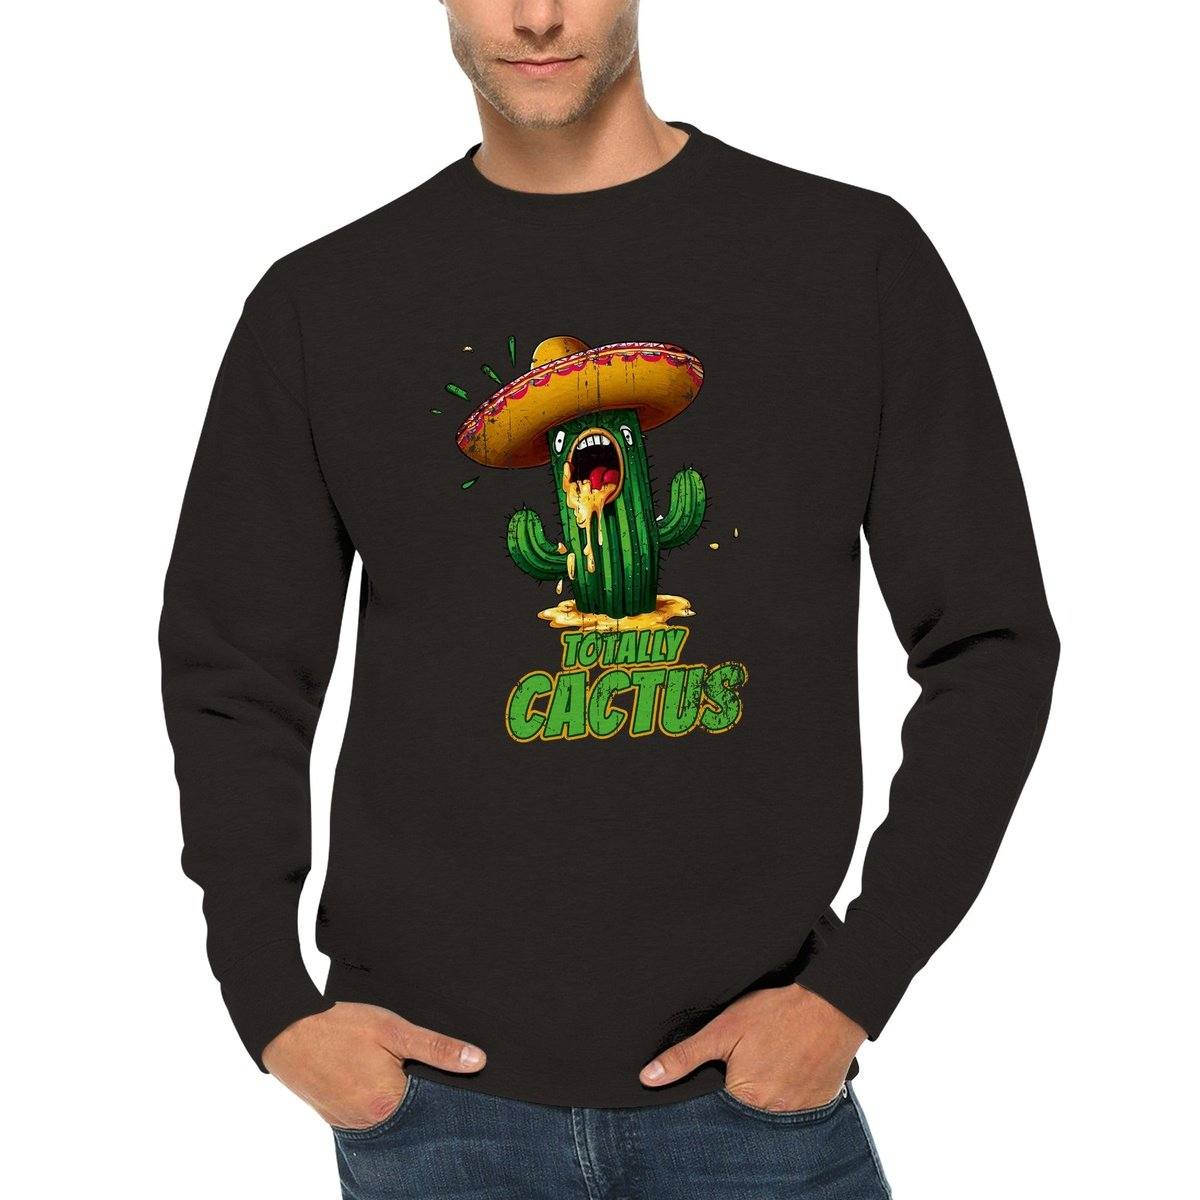 Totally Cactus Jumper Australia Online Color